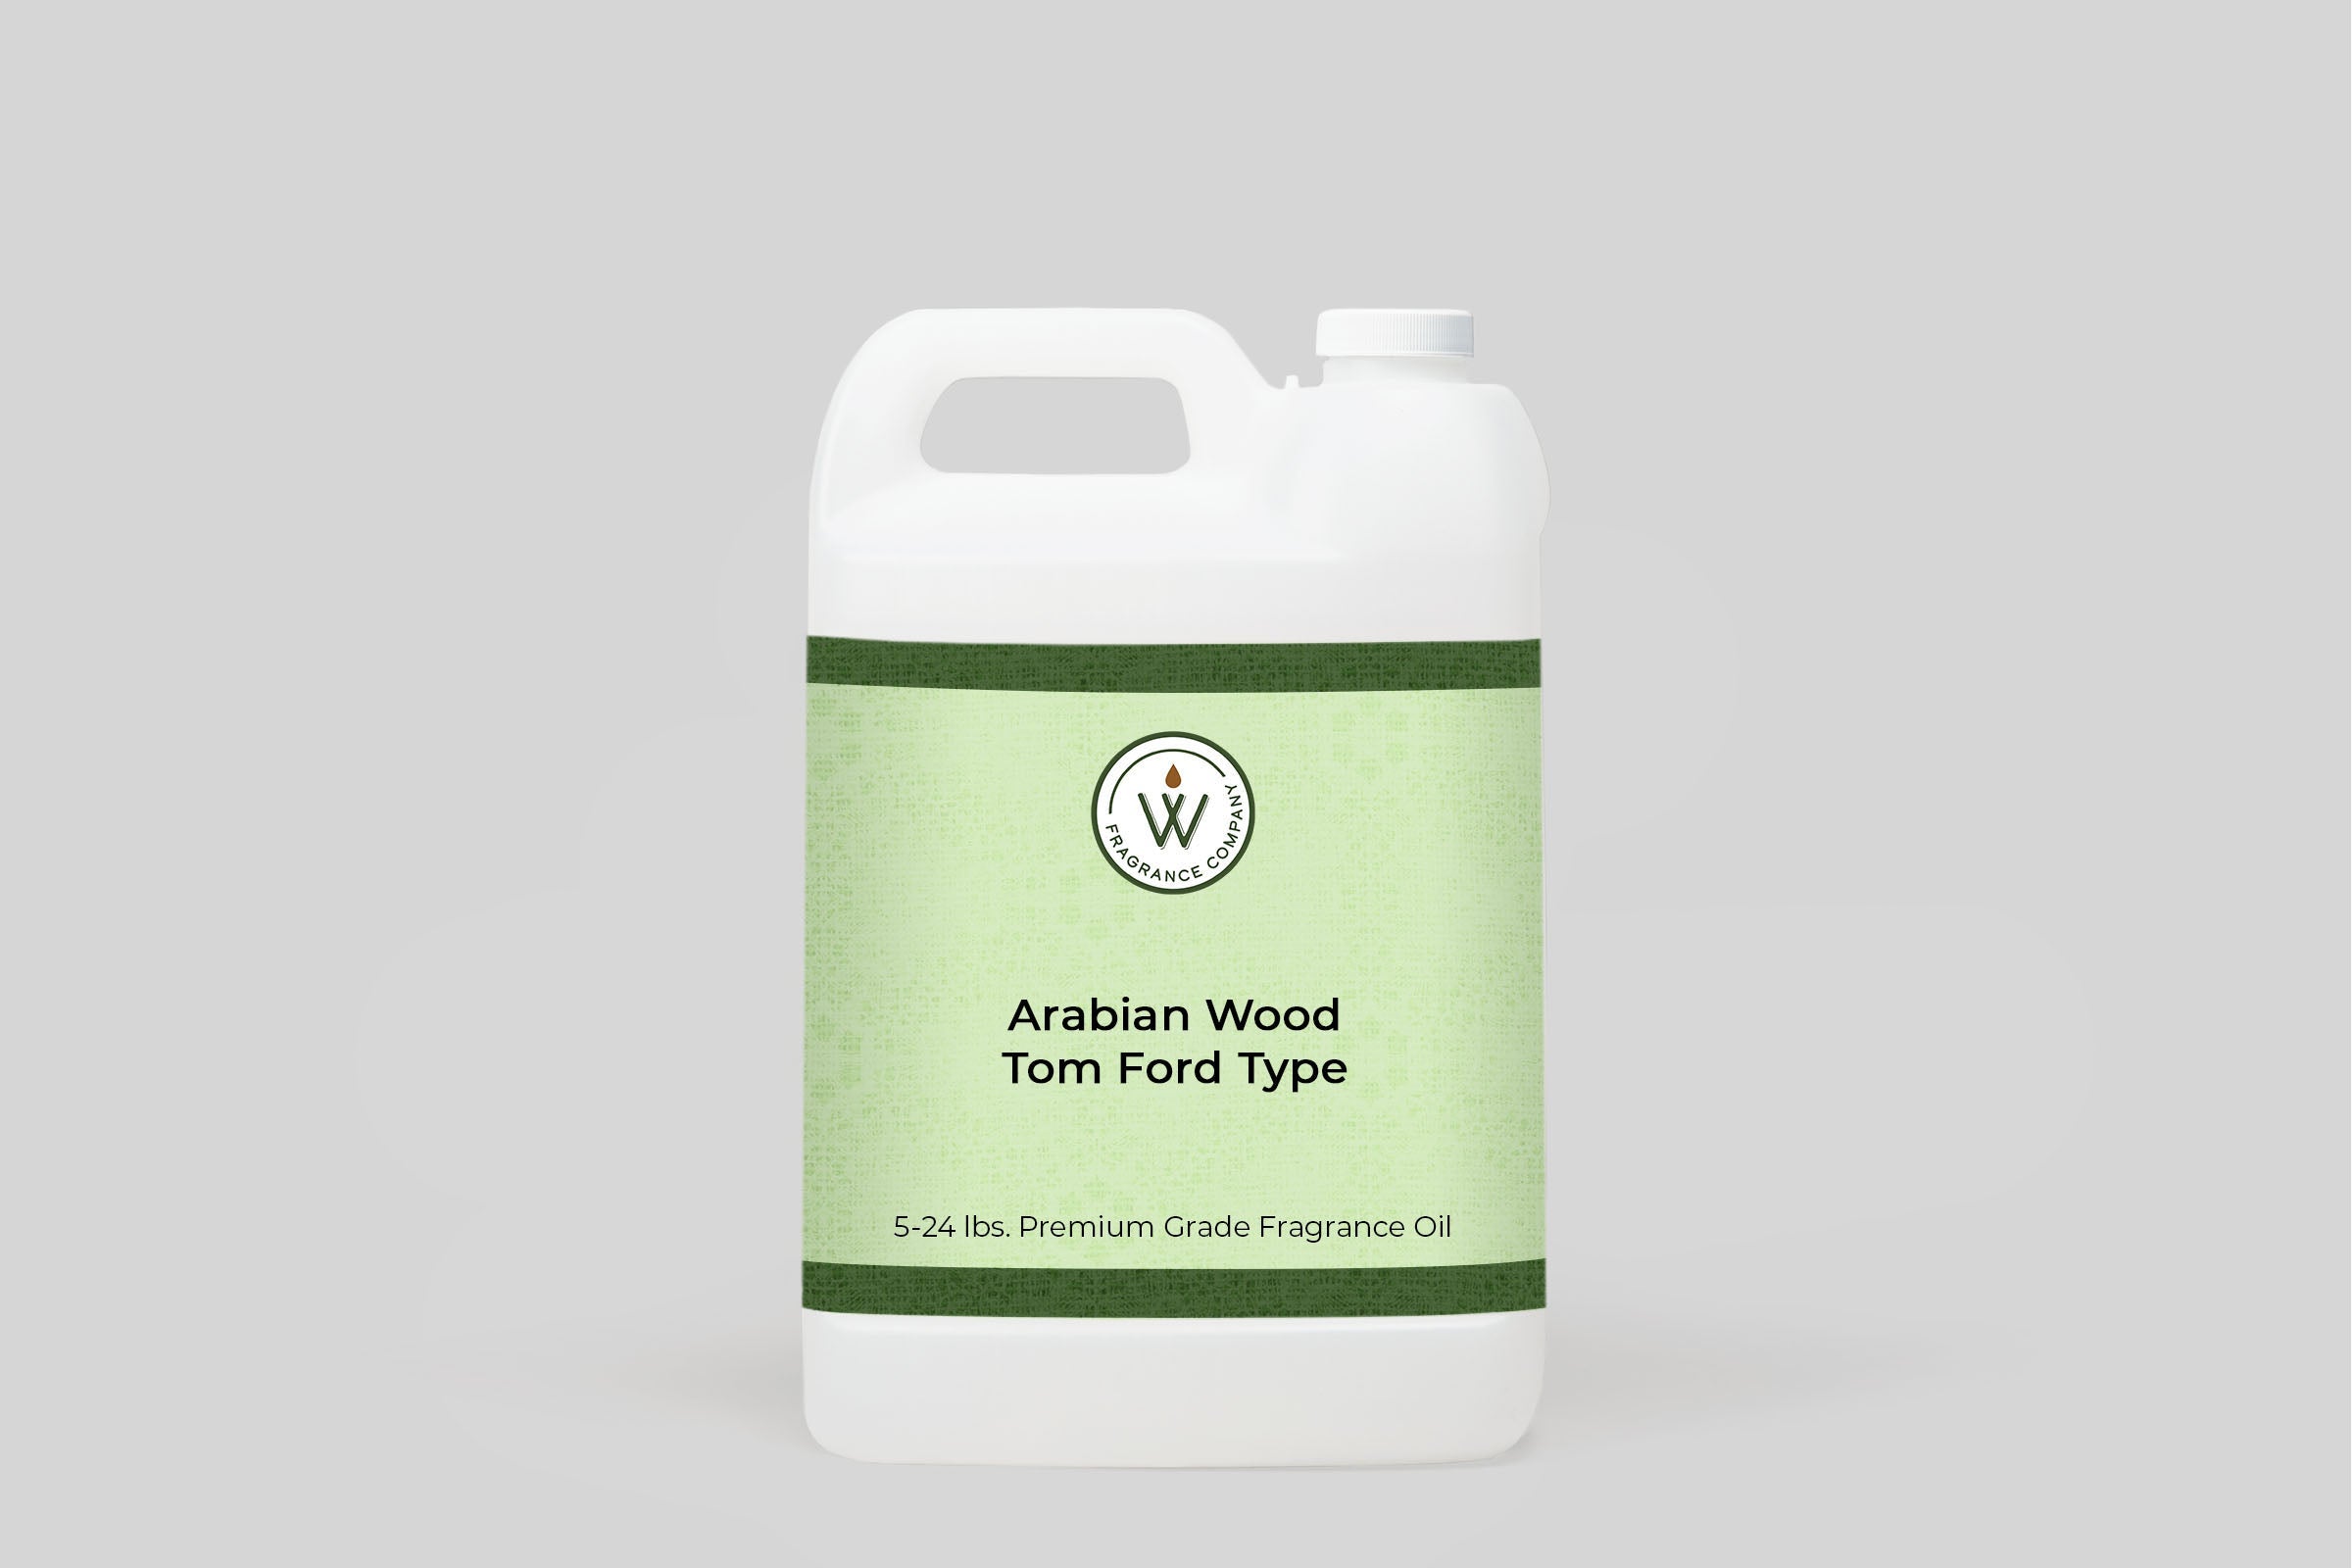 Arabian Wood Tom Ford Type Fragrance Oil